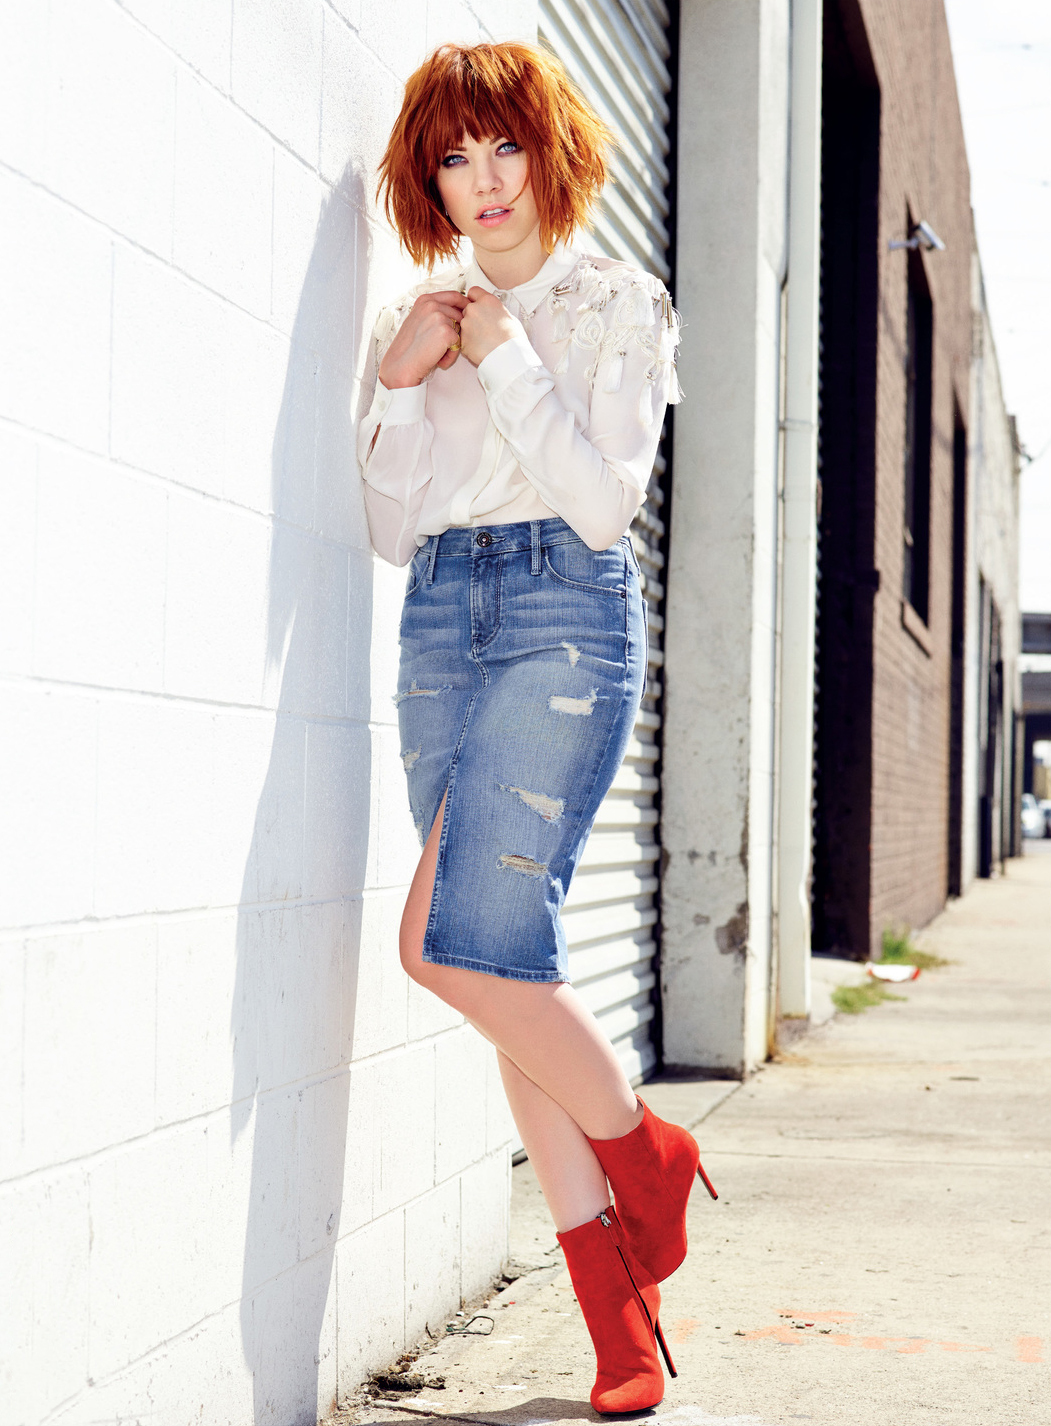 Carly Rae Jepsen Women Singer Canadian Short Hair Redhead Jean Skirt ...